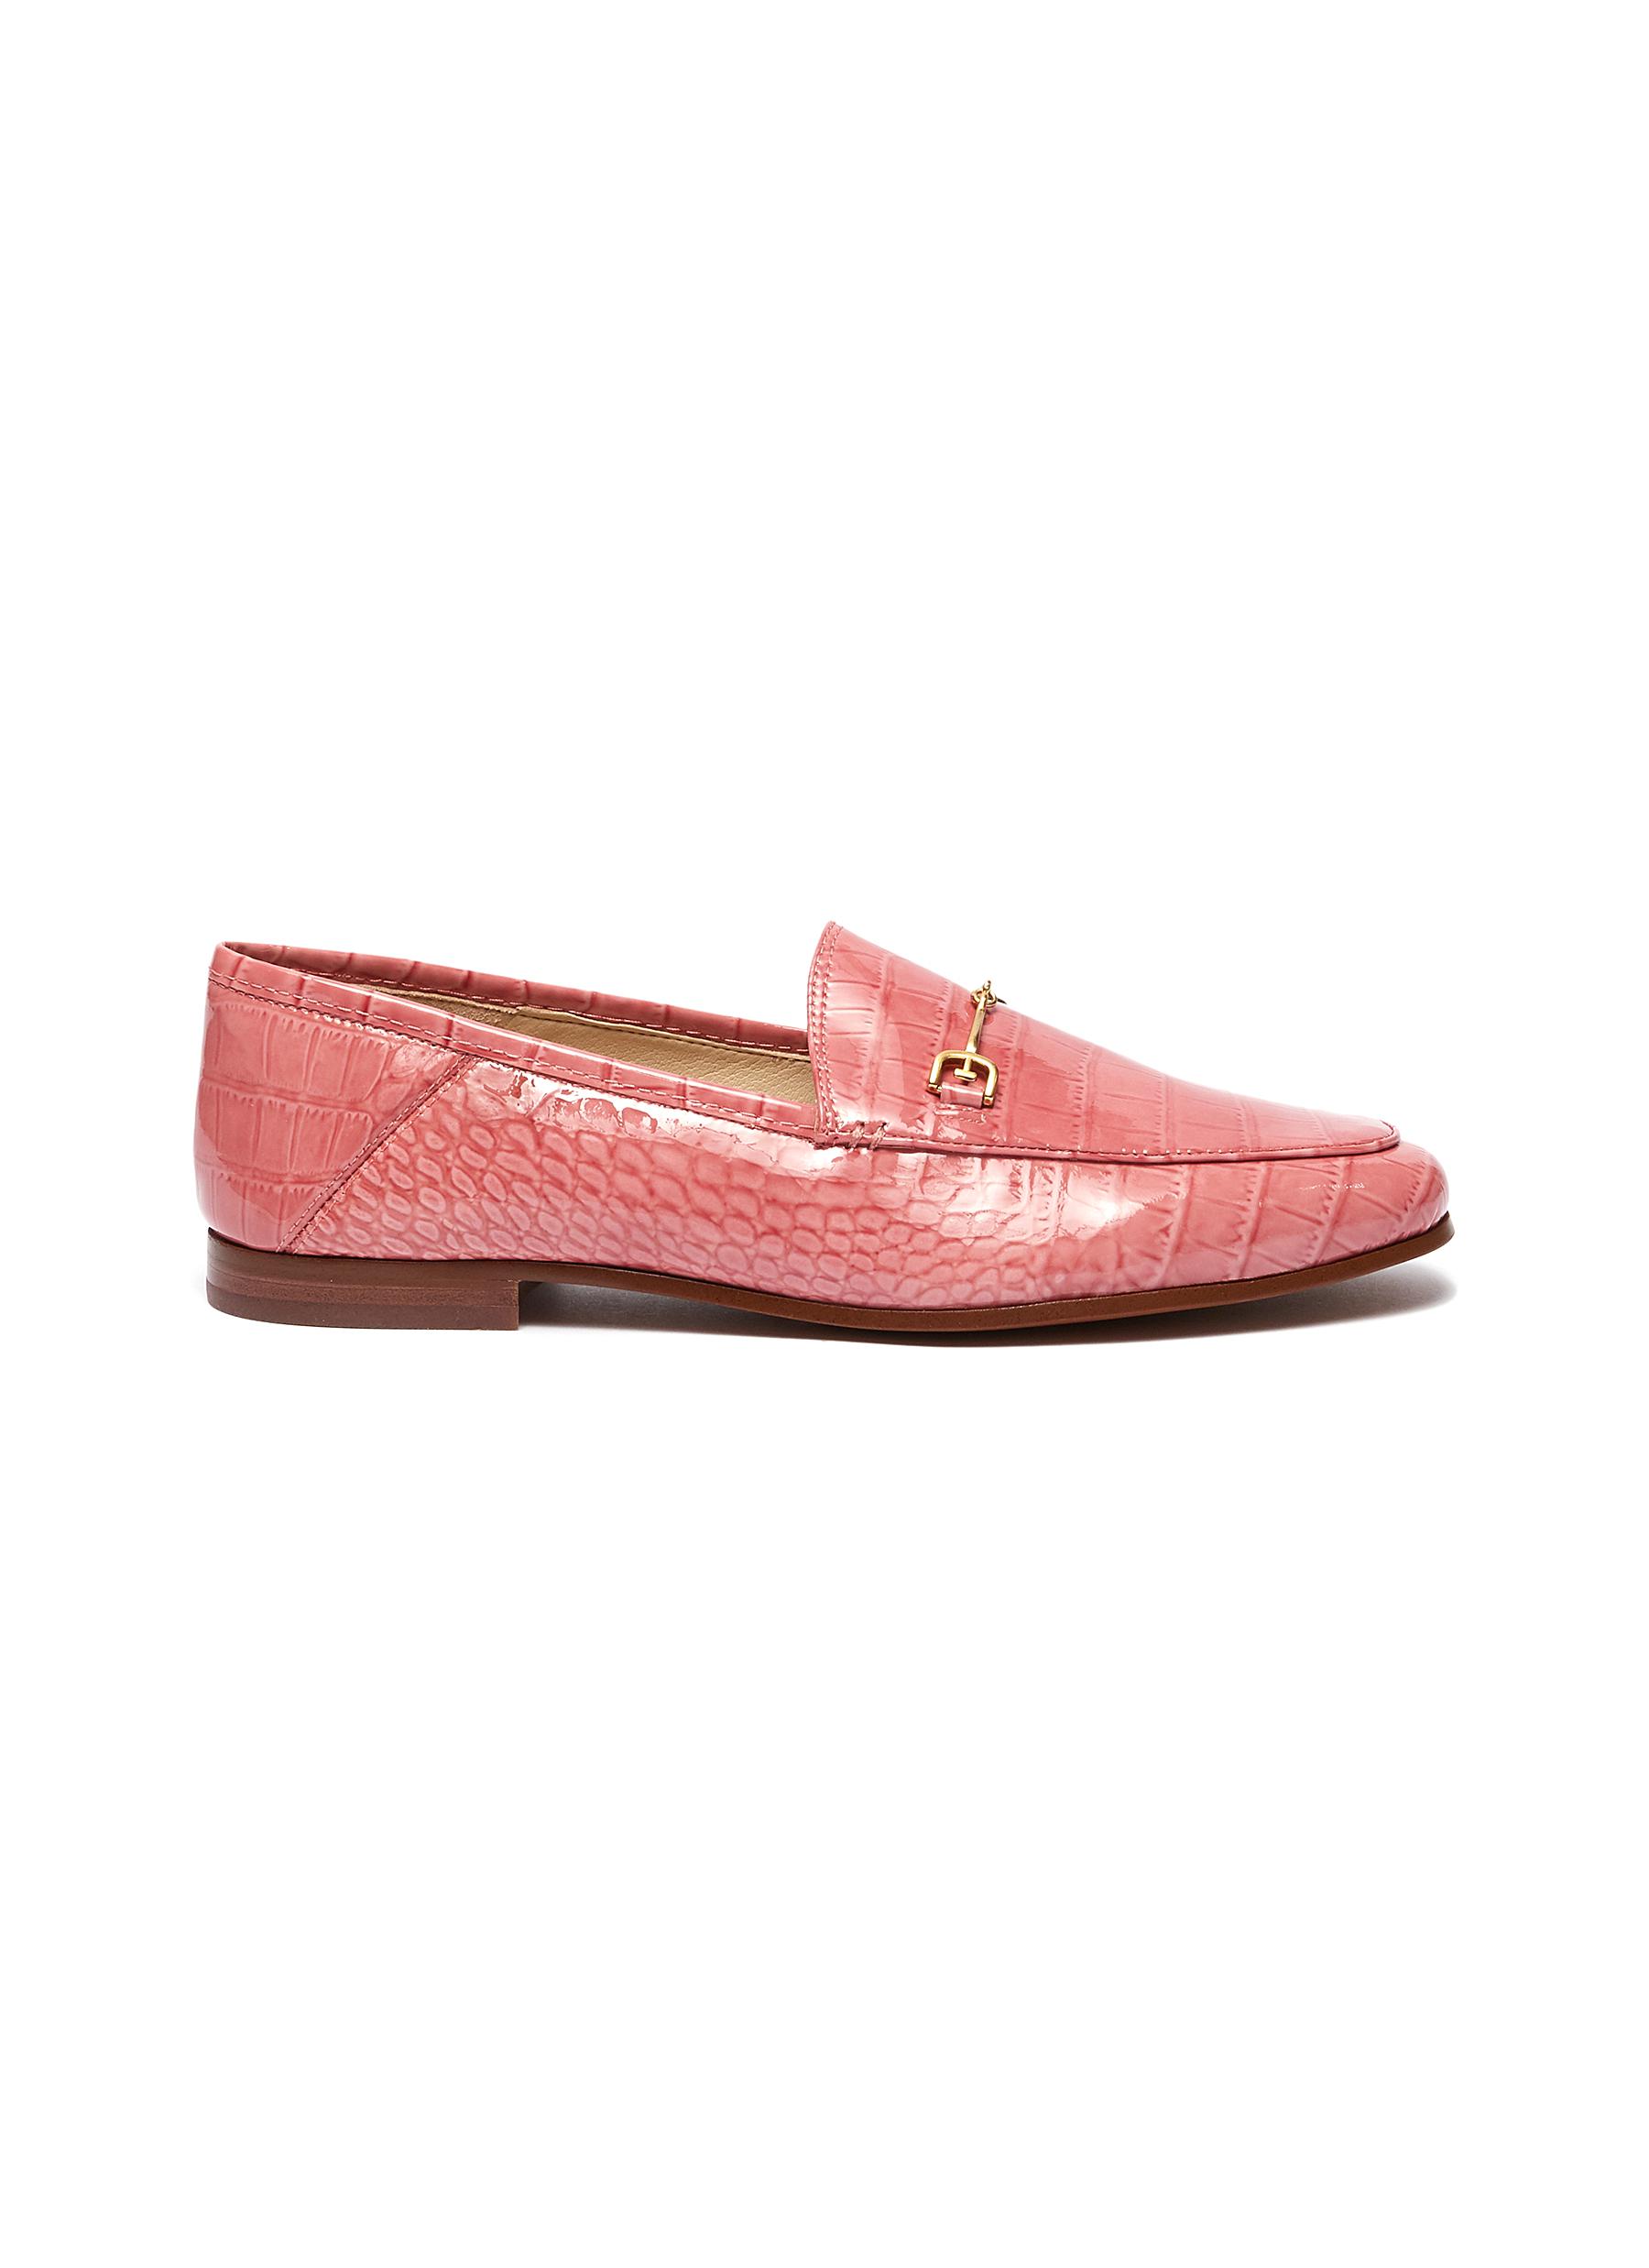 sam edelman pink loafers